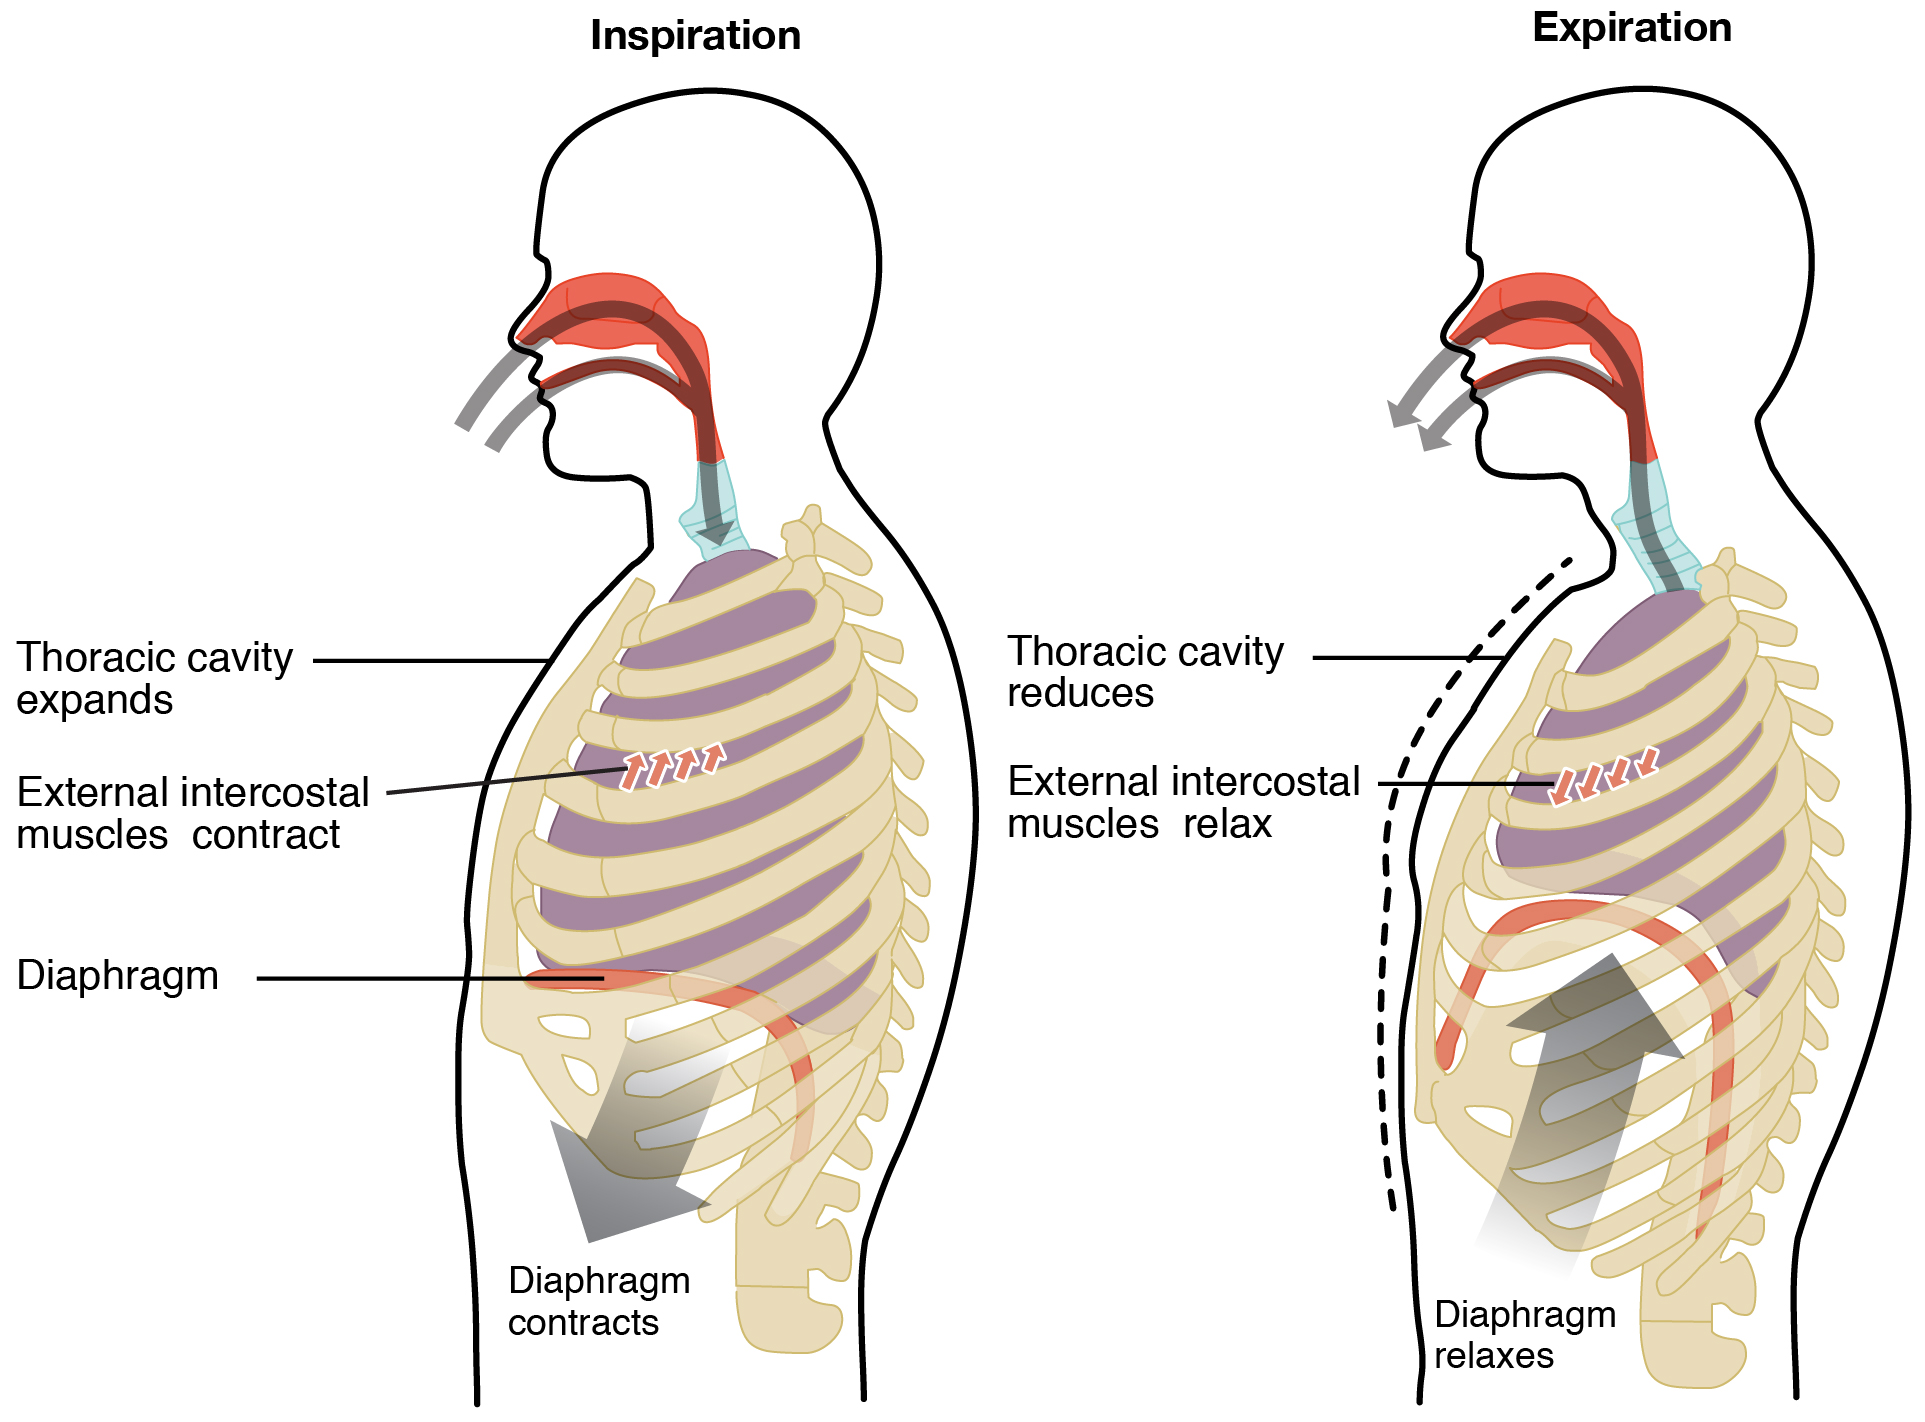 Inspiration and expiration process diagram. Image description available.